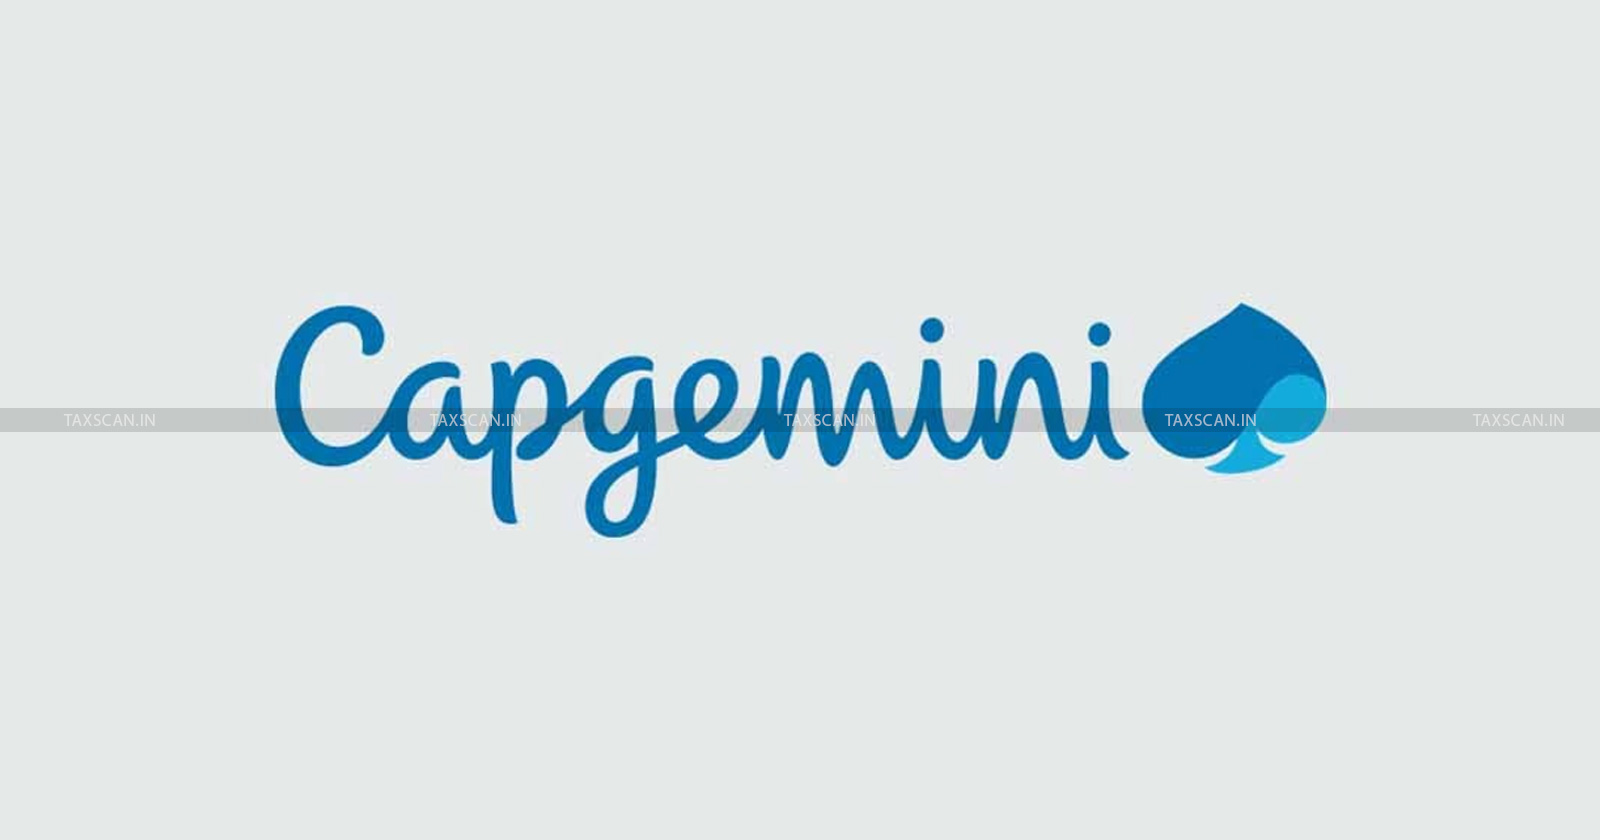 CA Vacancy - in Capgemini - TAXSCAN